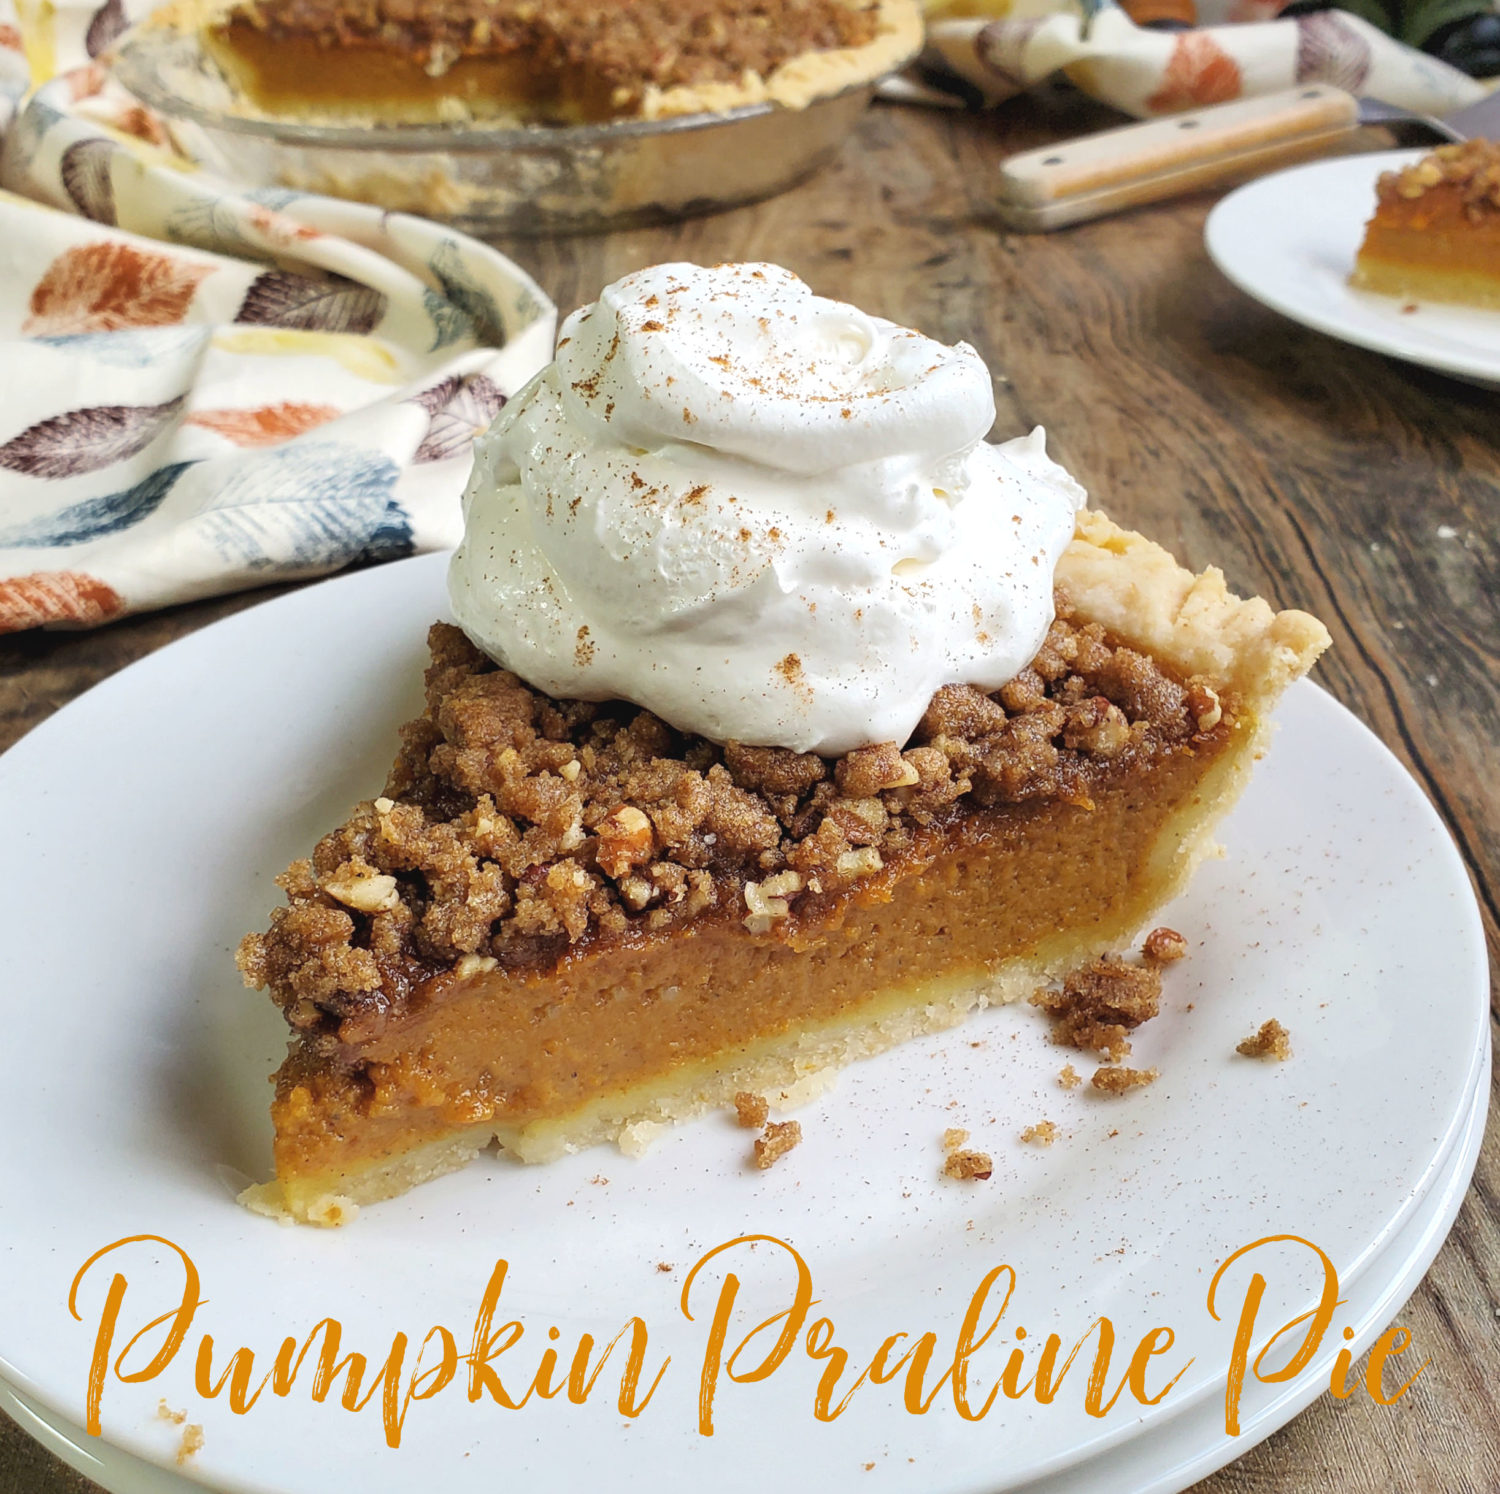 Pumpkin Praline Pie; a spiced pumpkin pie baked with a brown sugar-pecan praline topping & a dollop of whipped cream. Pumpkin pie game changer.